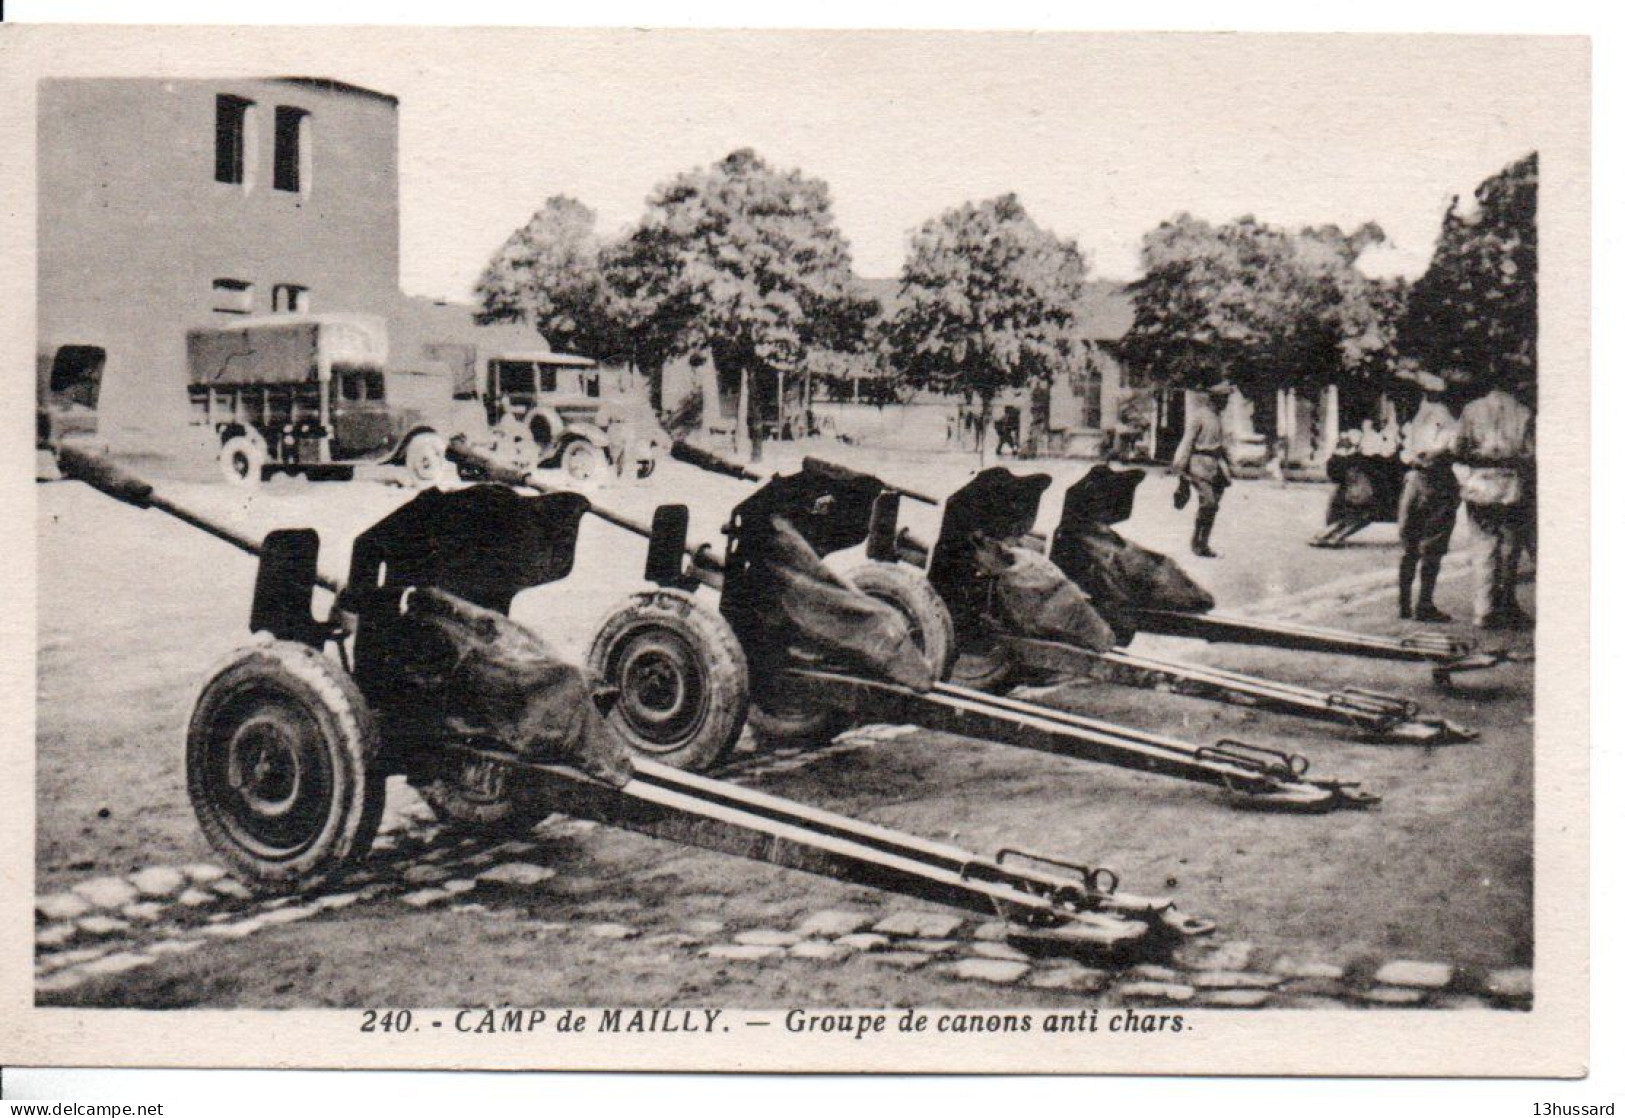 Carte Postale Ancienne Militaire - Camp De Mailly. Groupe De Canons Anti Chars - Artillerie - Equipment